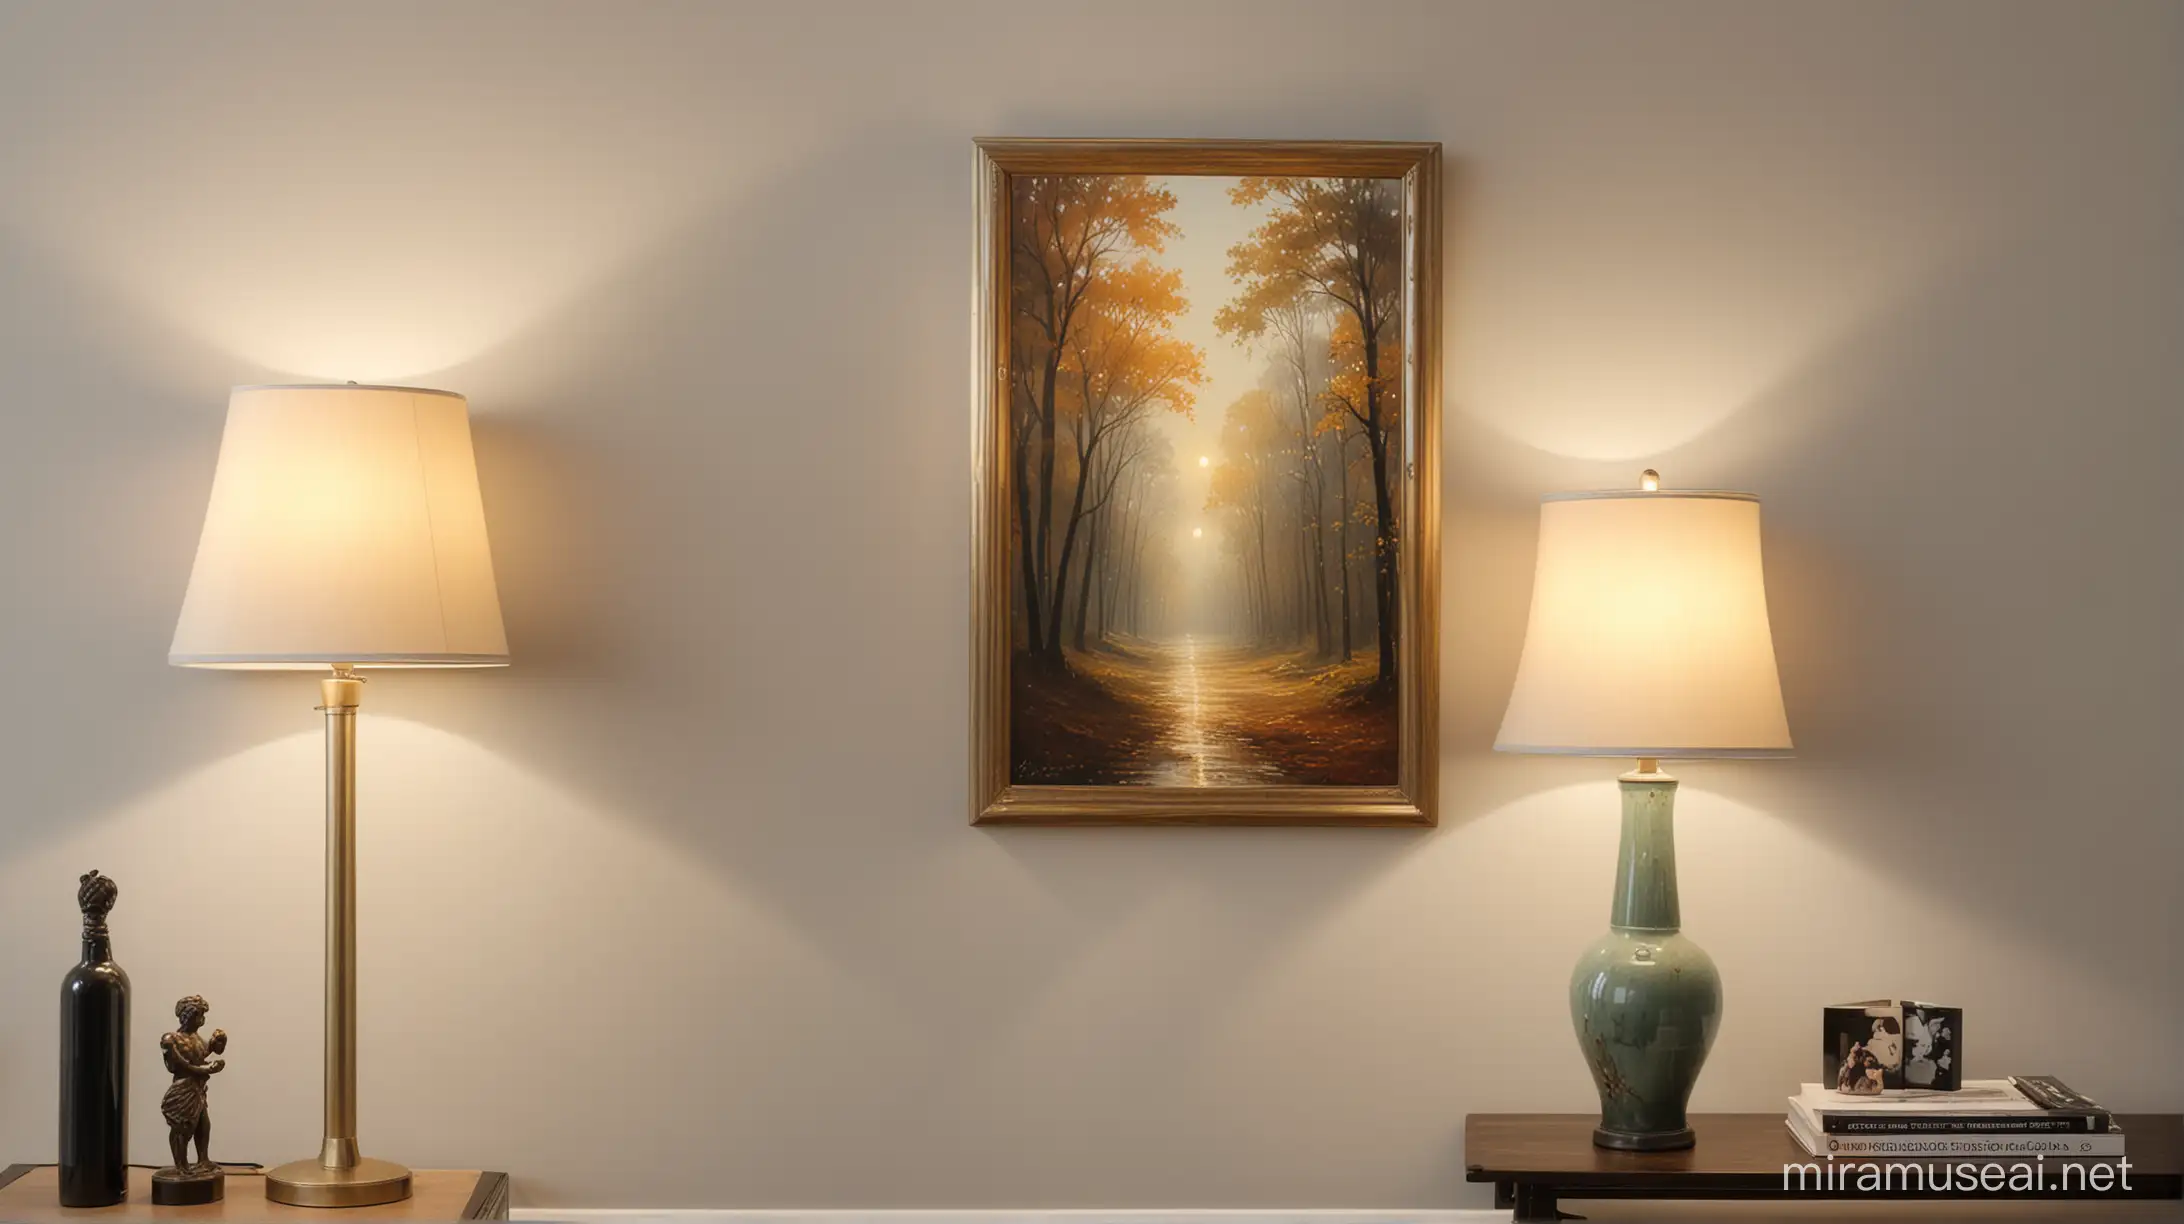 Wall Paintings and Table Lamp Illuminating Room Corner